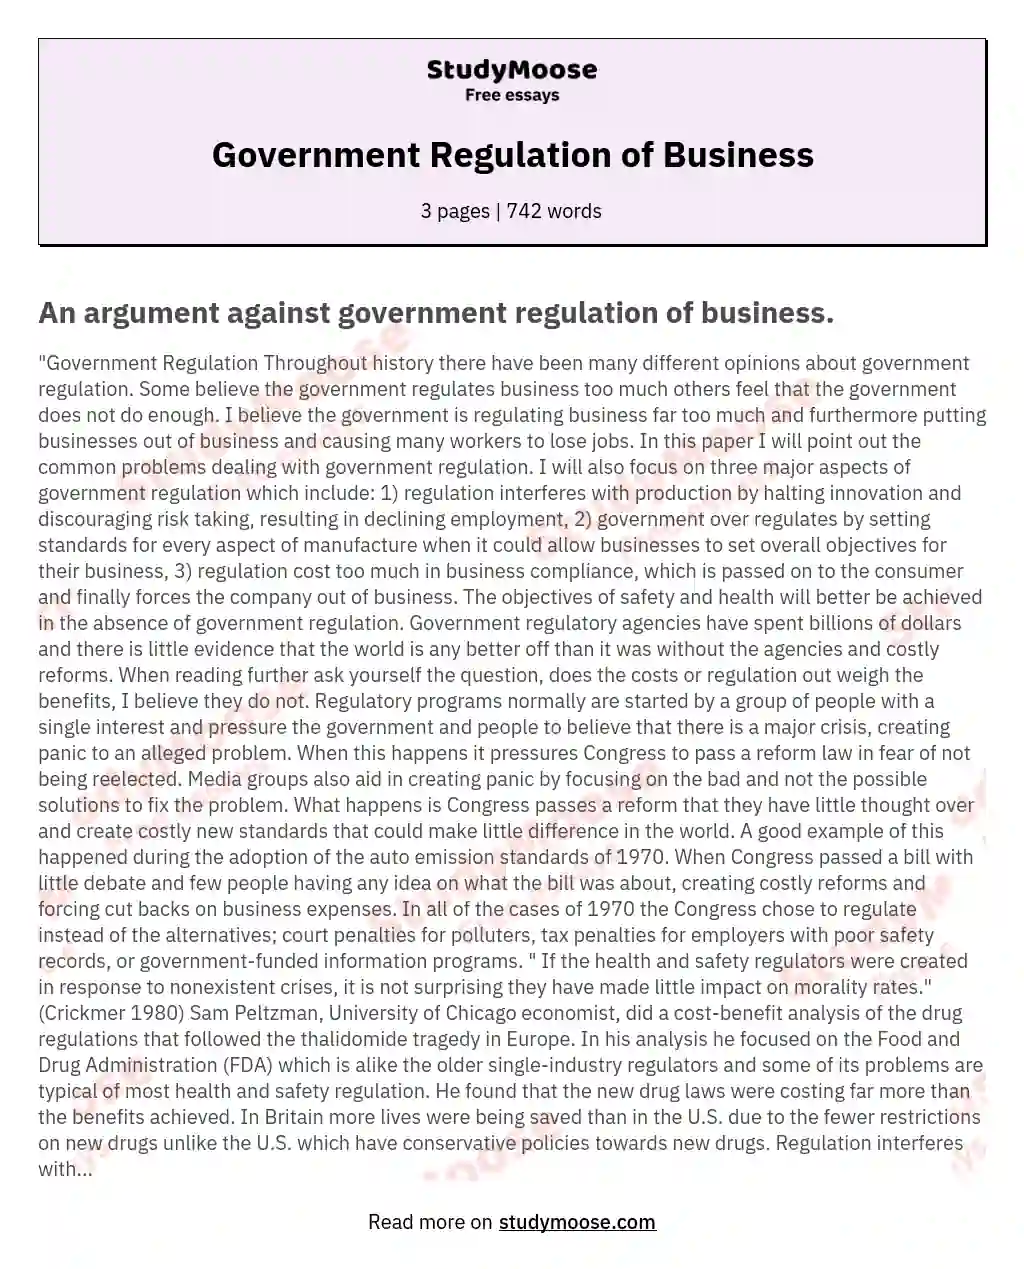 Government Regulation of Business essay